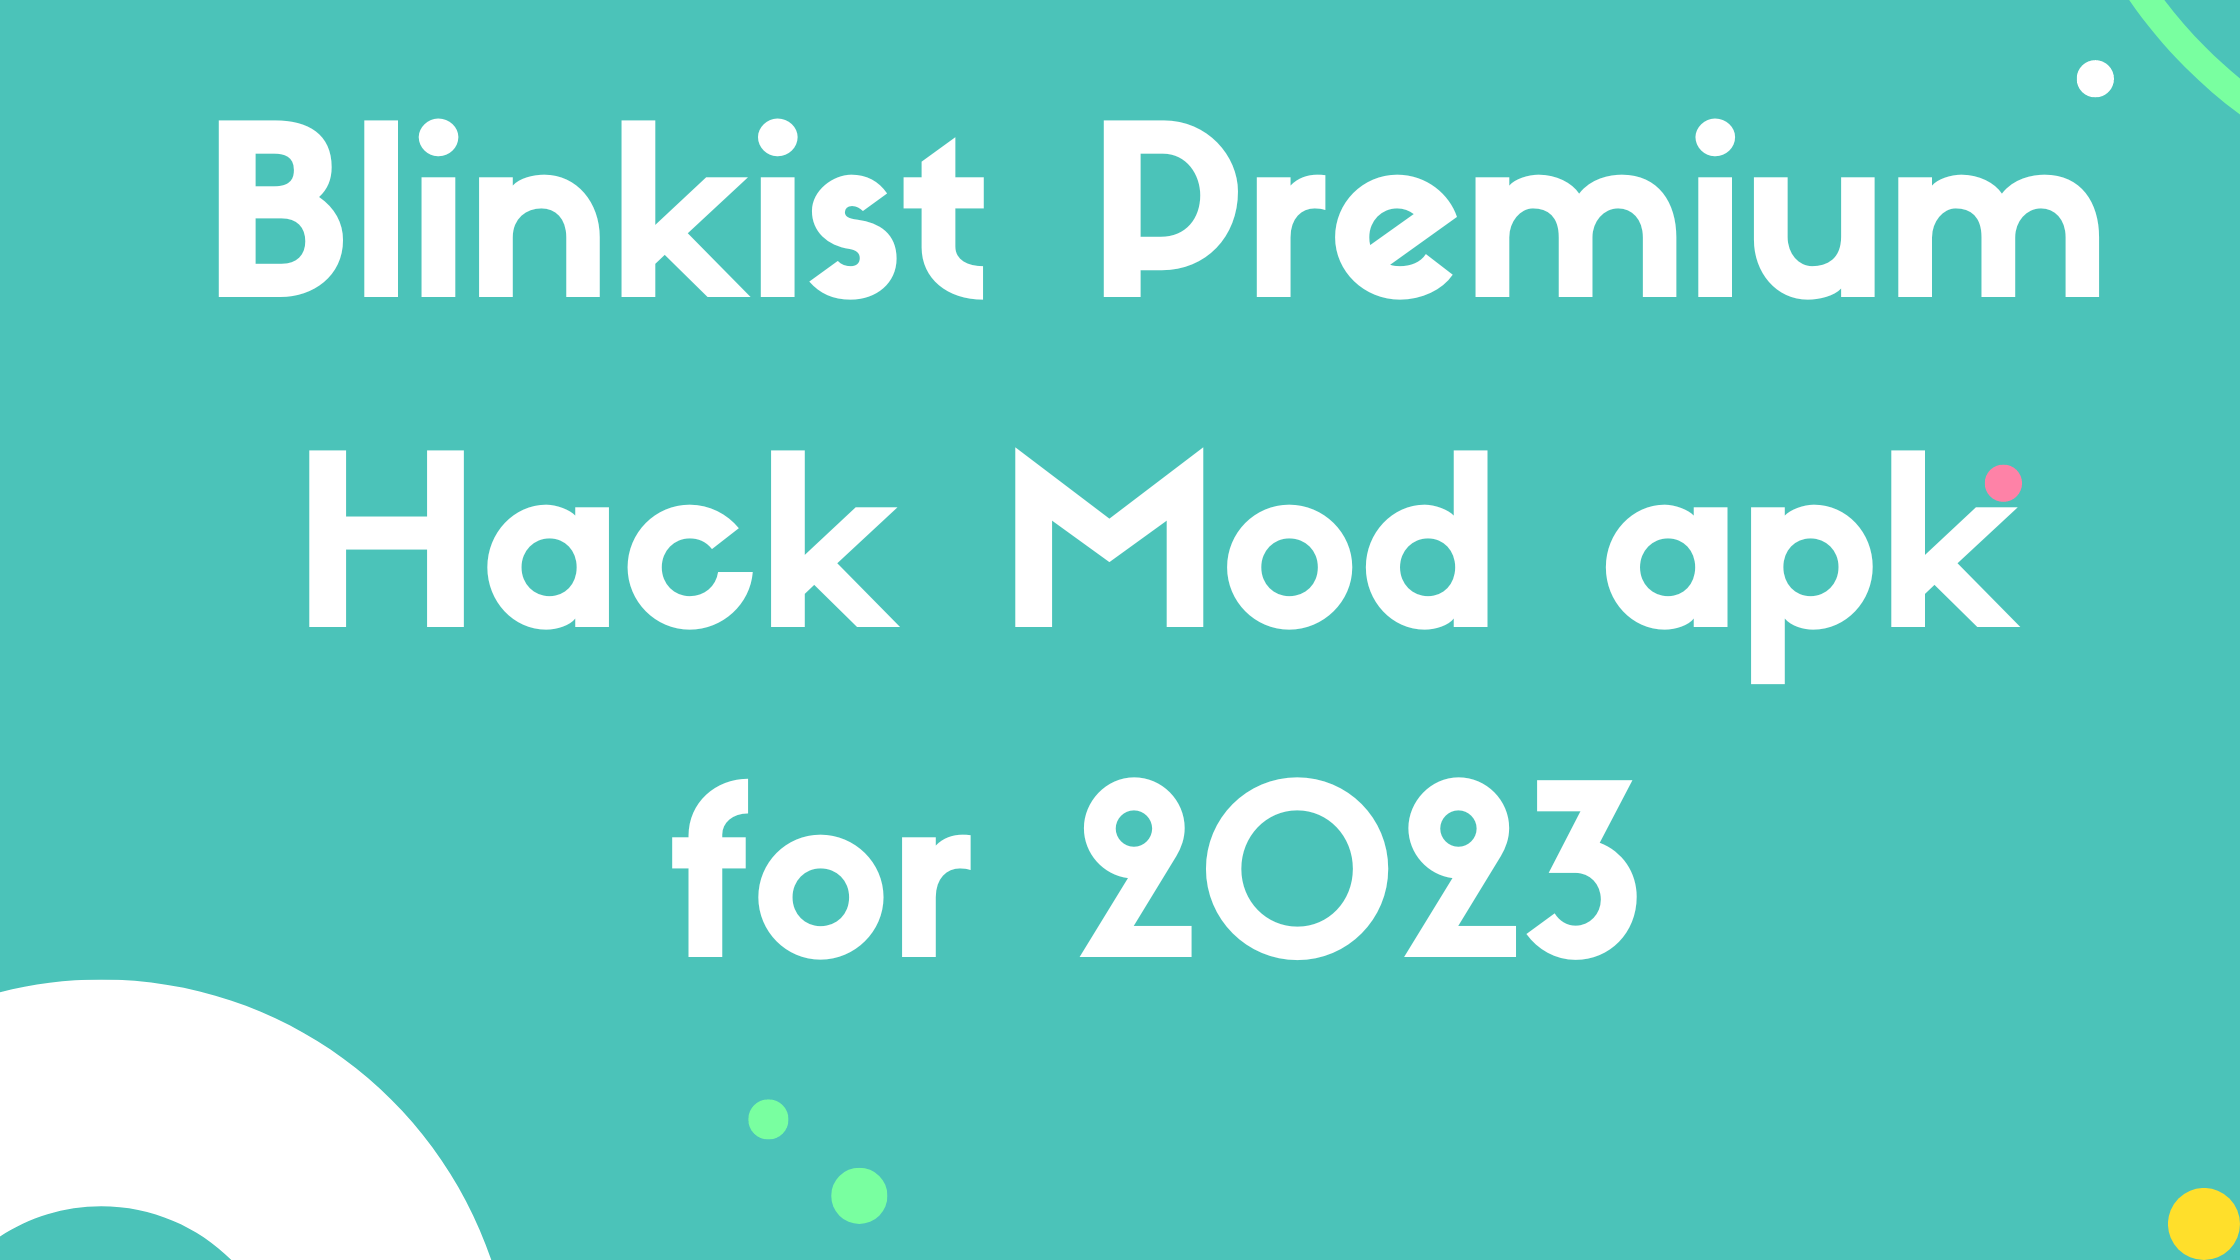 Blinkist Premium Hack Mod apk for 2023